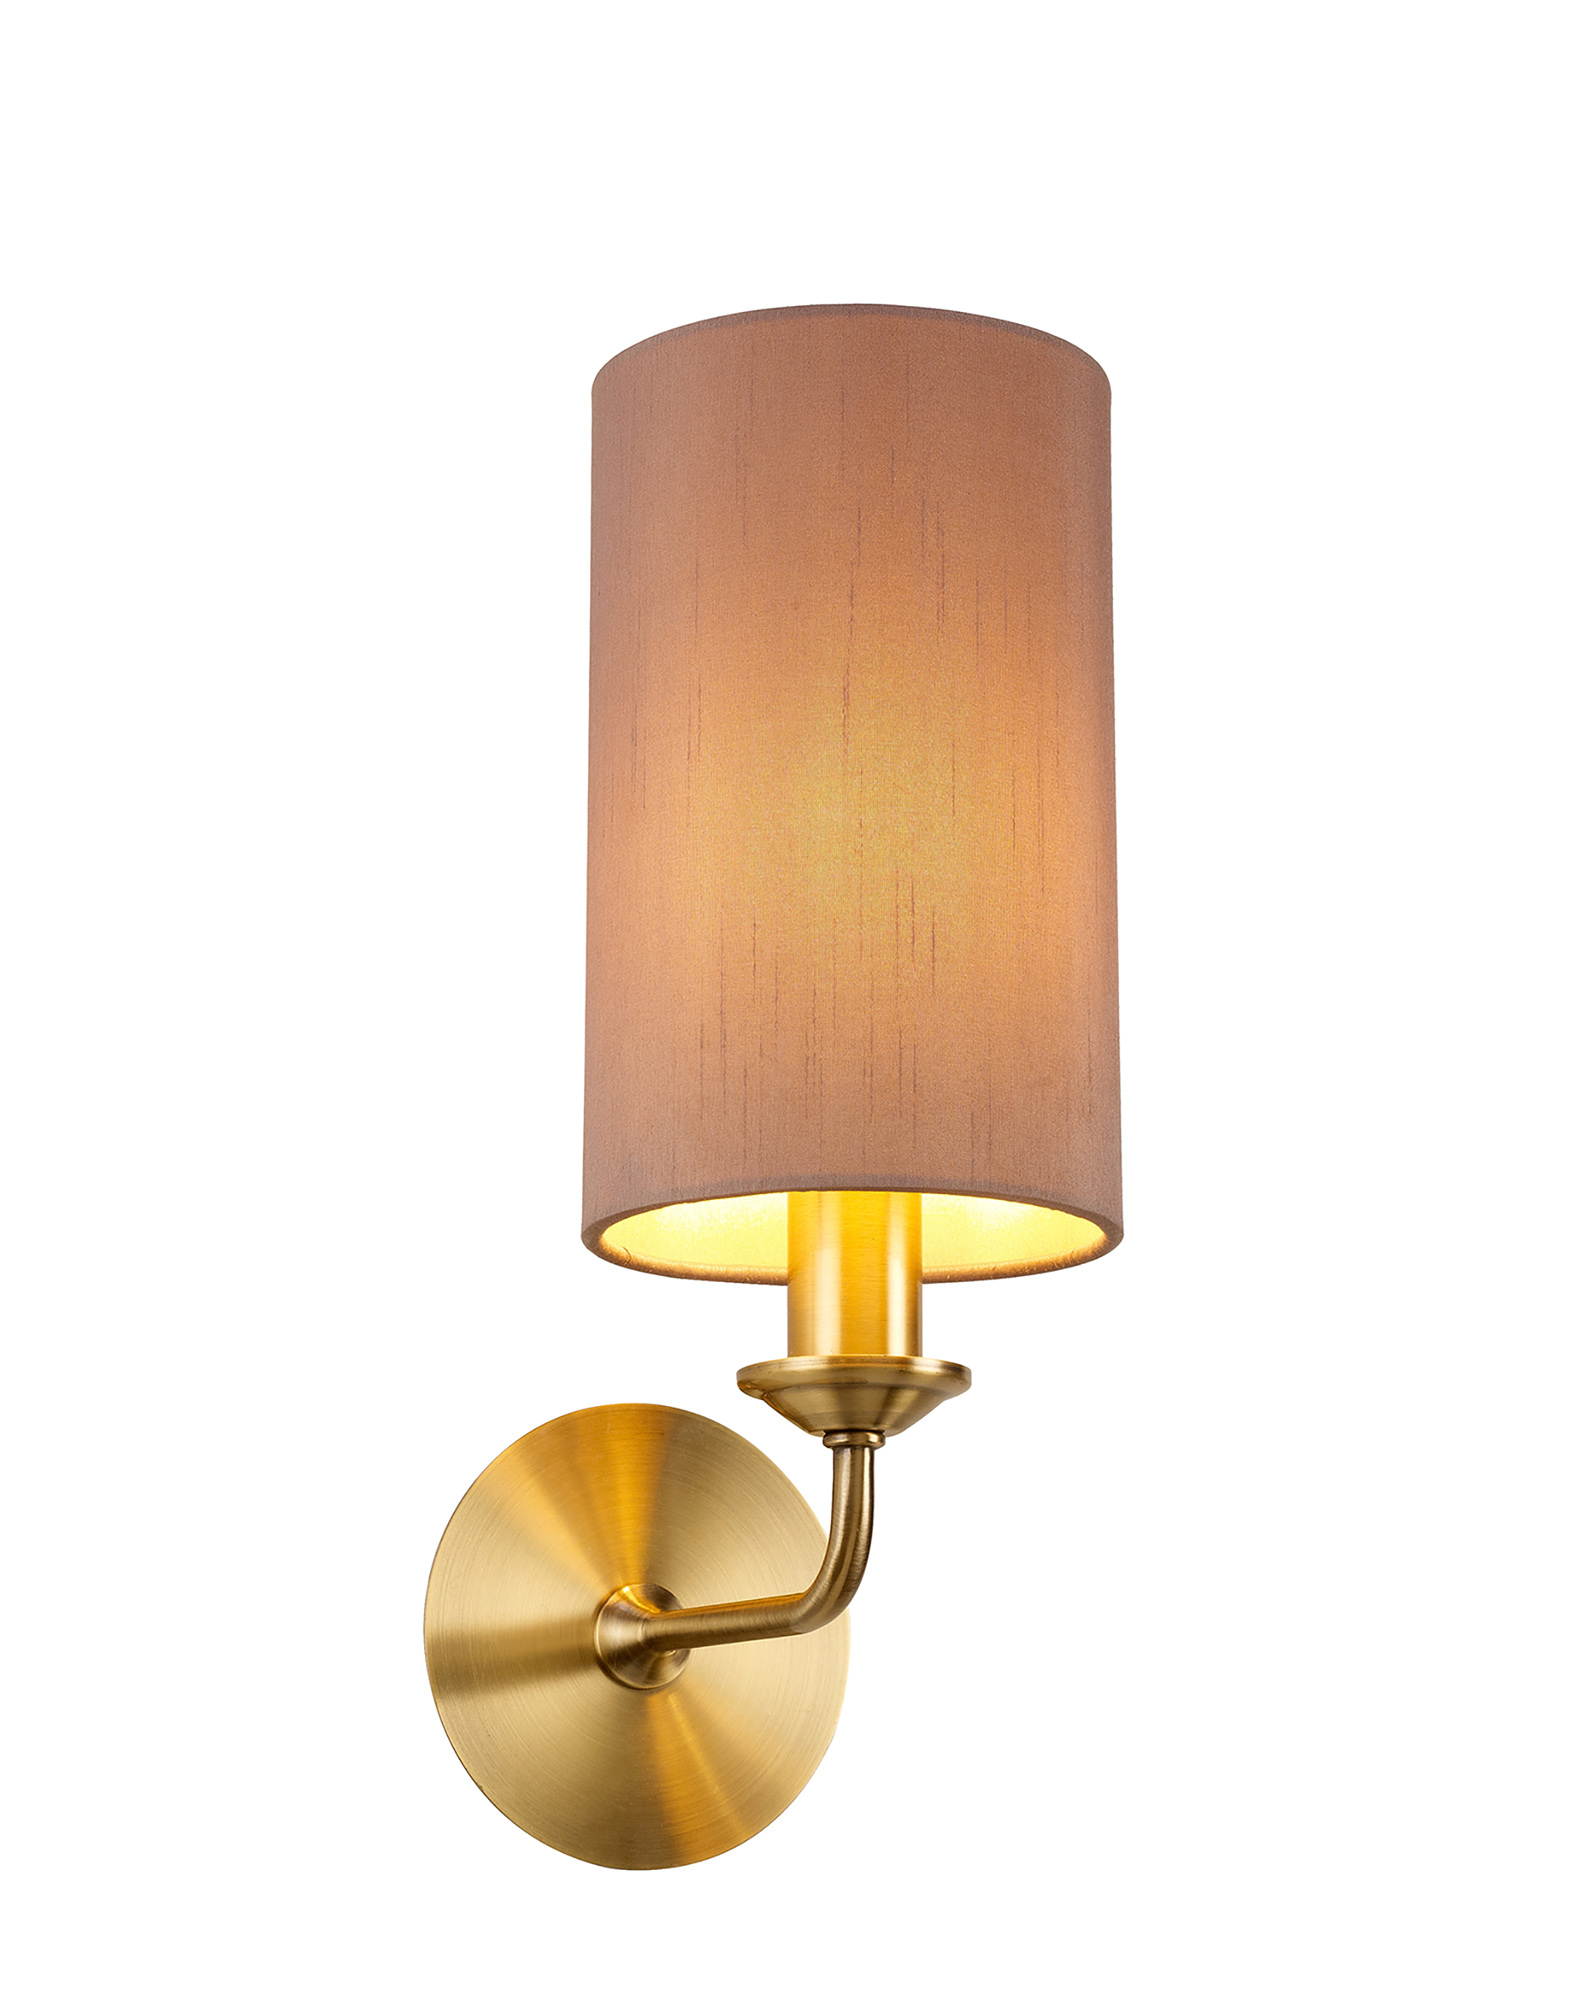 DK0044  Banyan Wall Lamp 1 Light Antique Brass; Taupe/Halo Gold